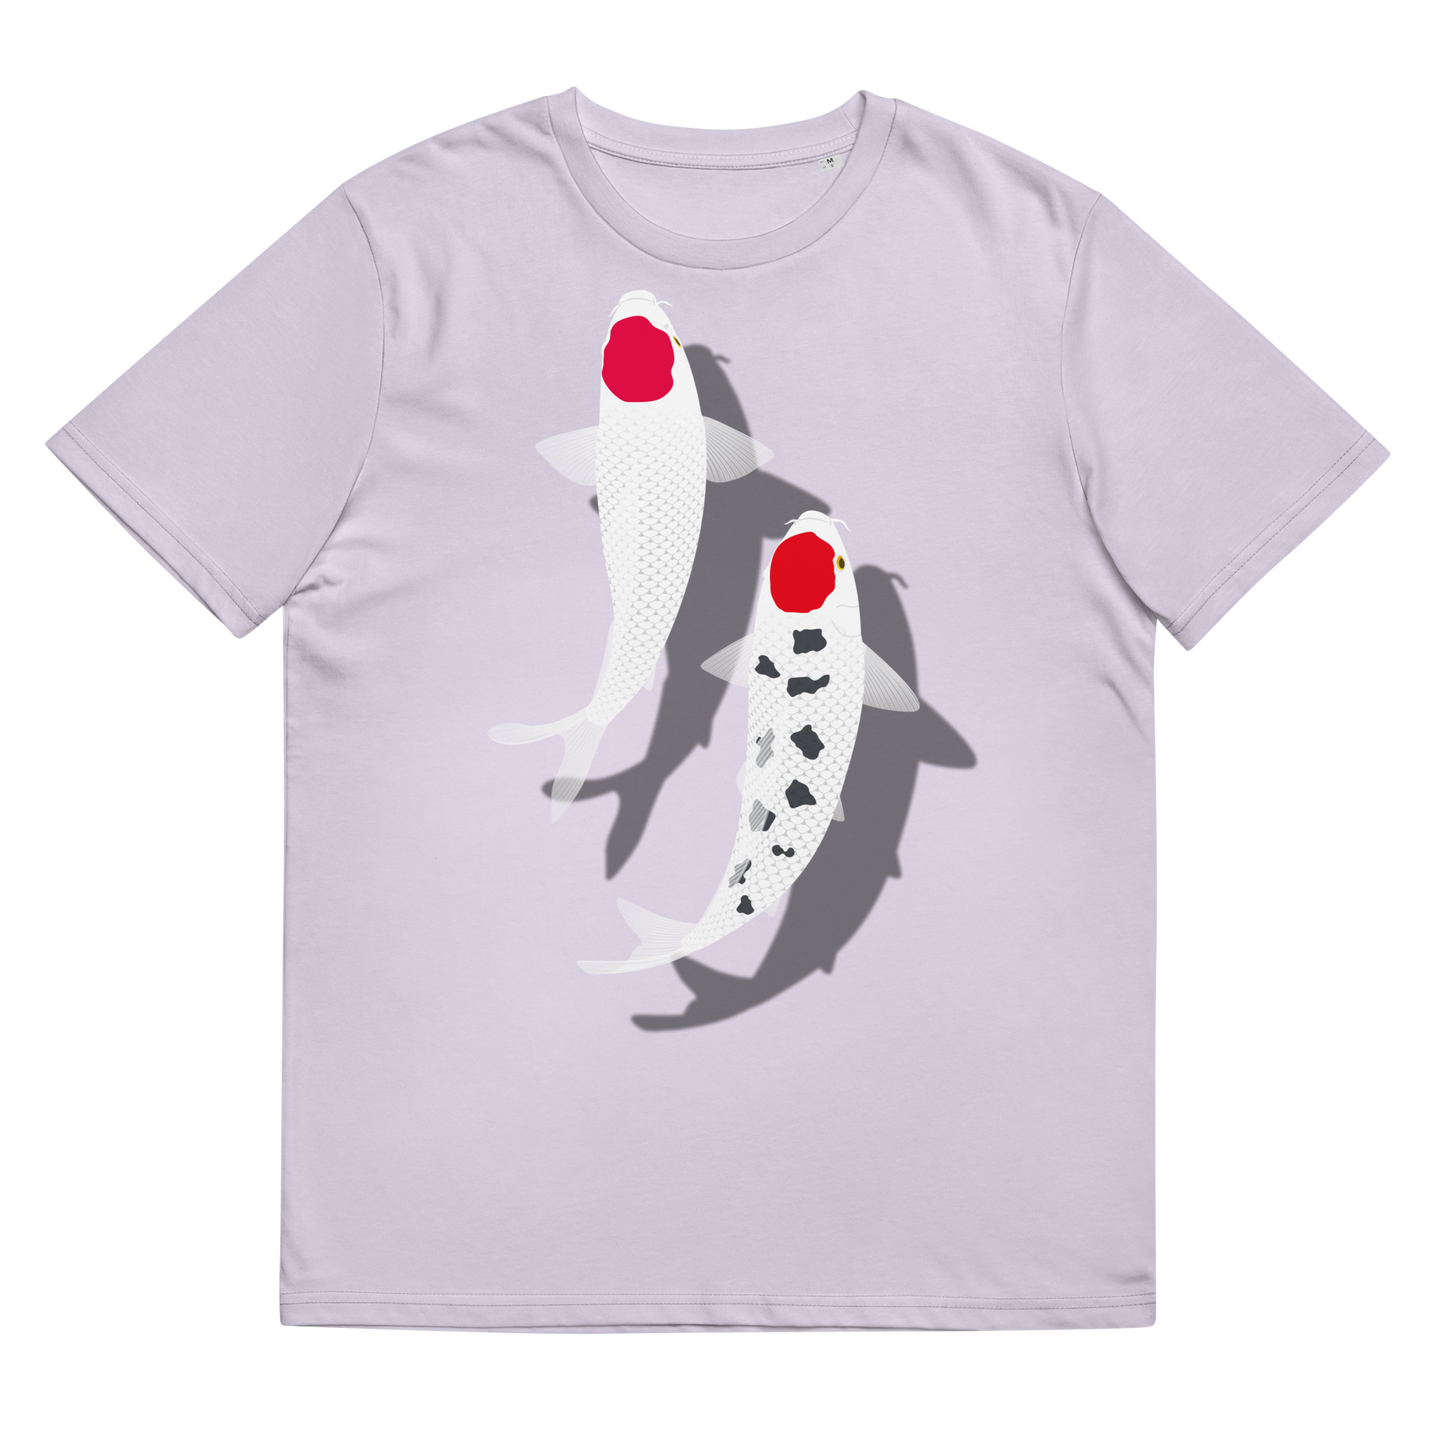 [Koi] Camiseta tancho roja y blanca (unisex)